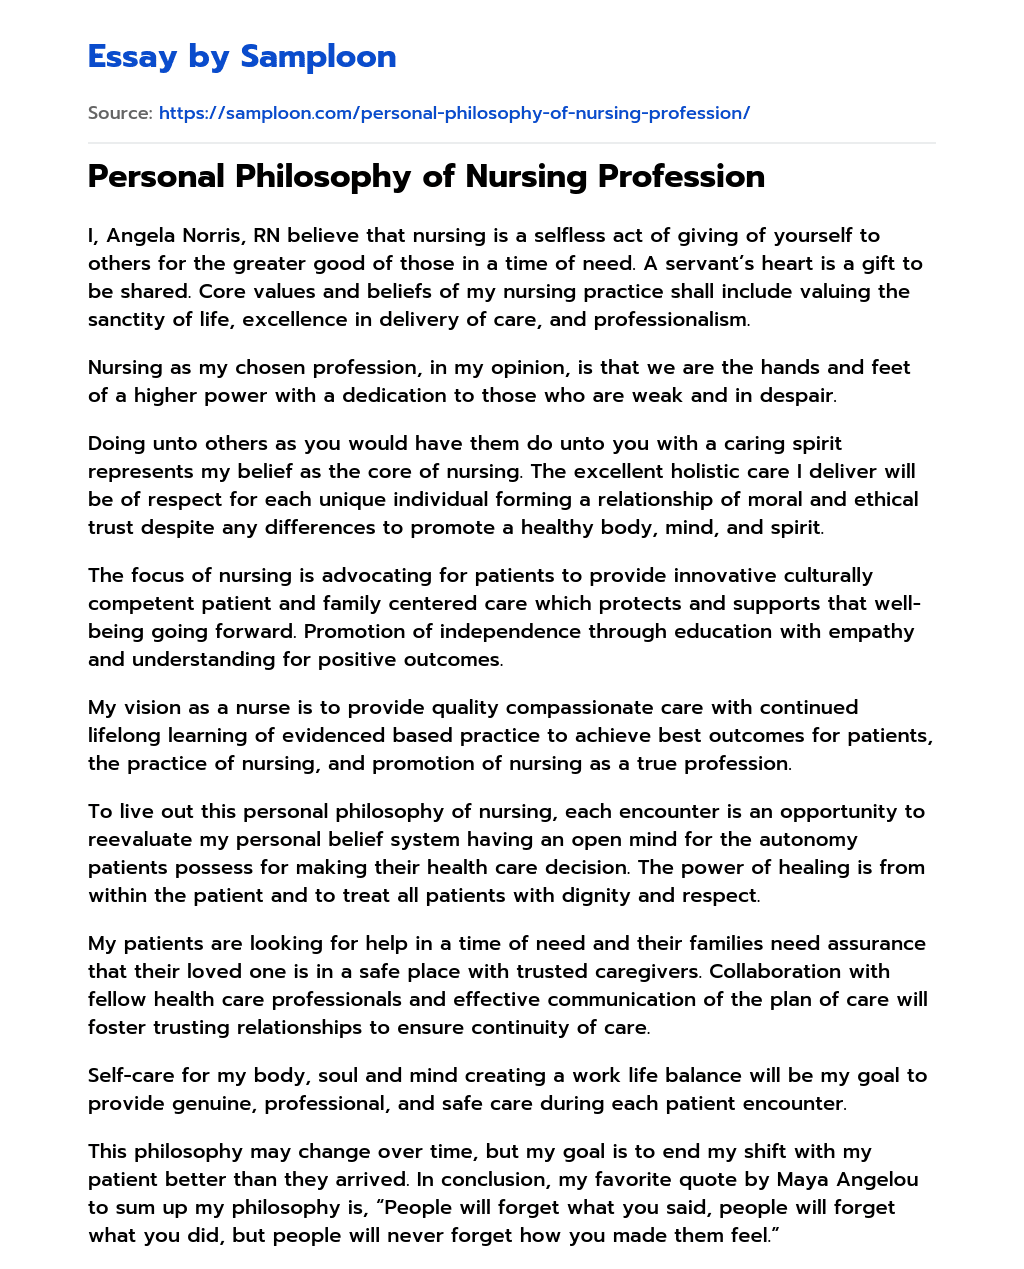 Personal Philosophy of Nursing Profession essay